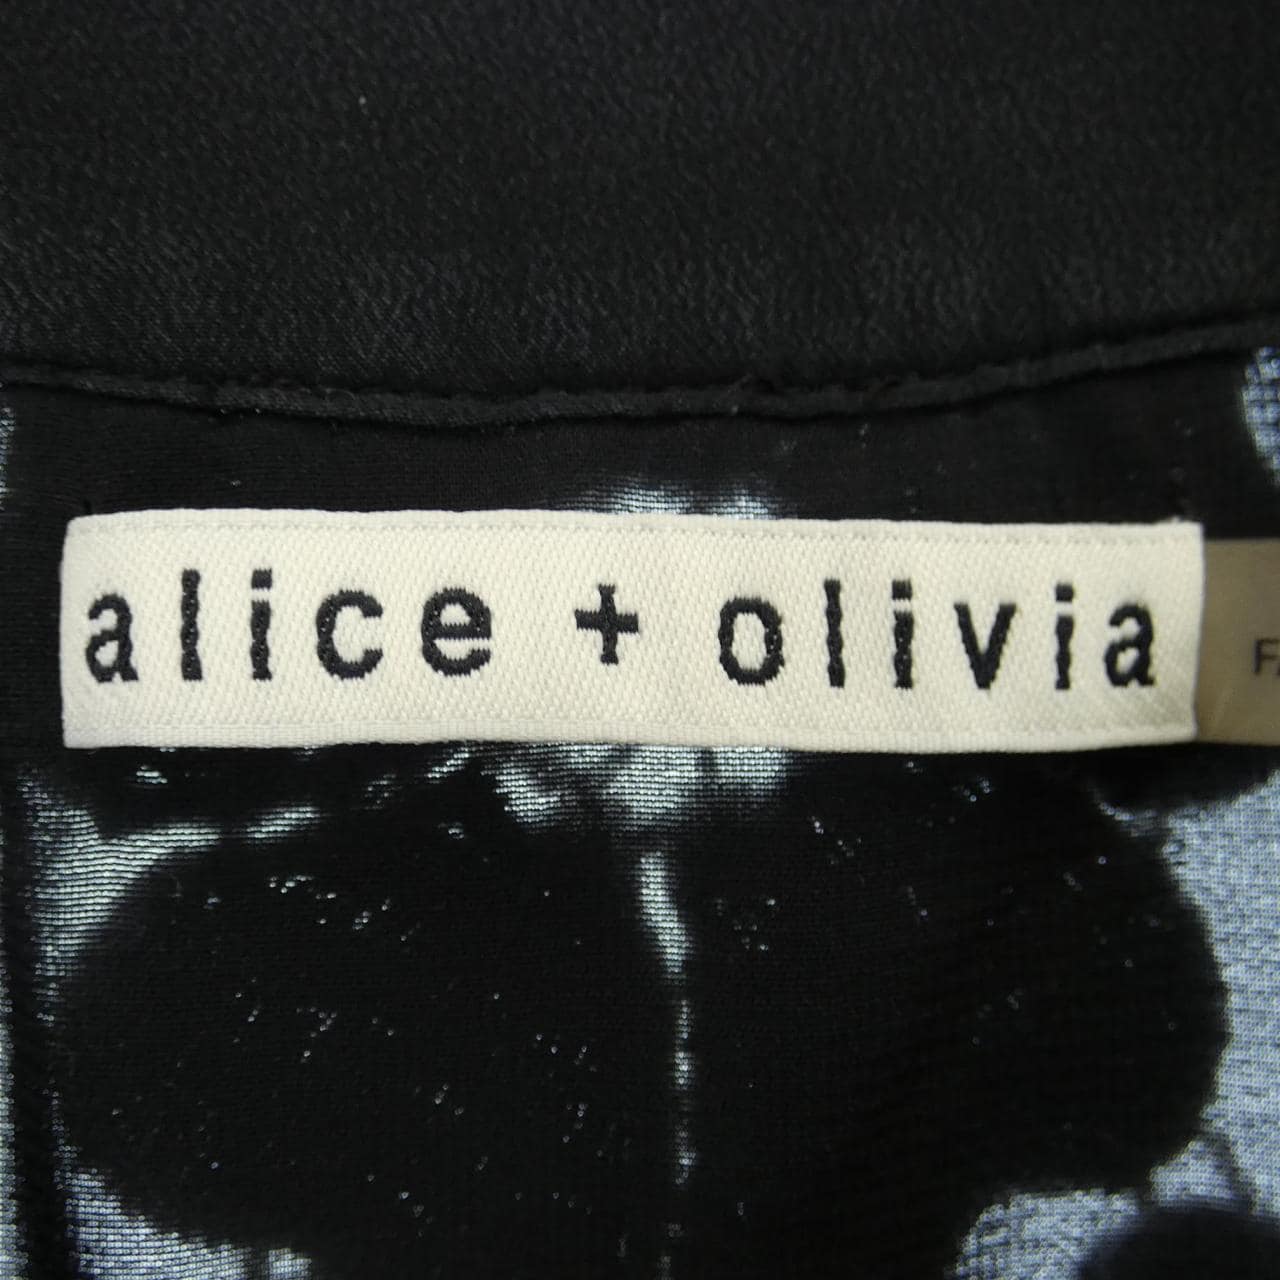 Alice and Olivia ALICE+OLIVIA blouson